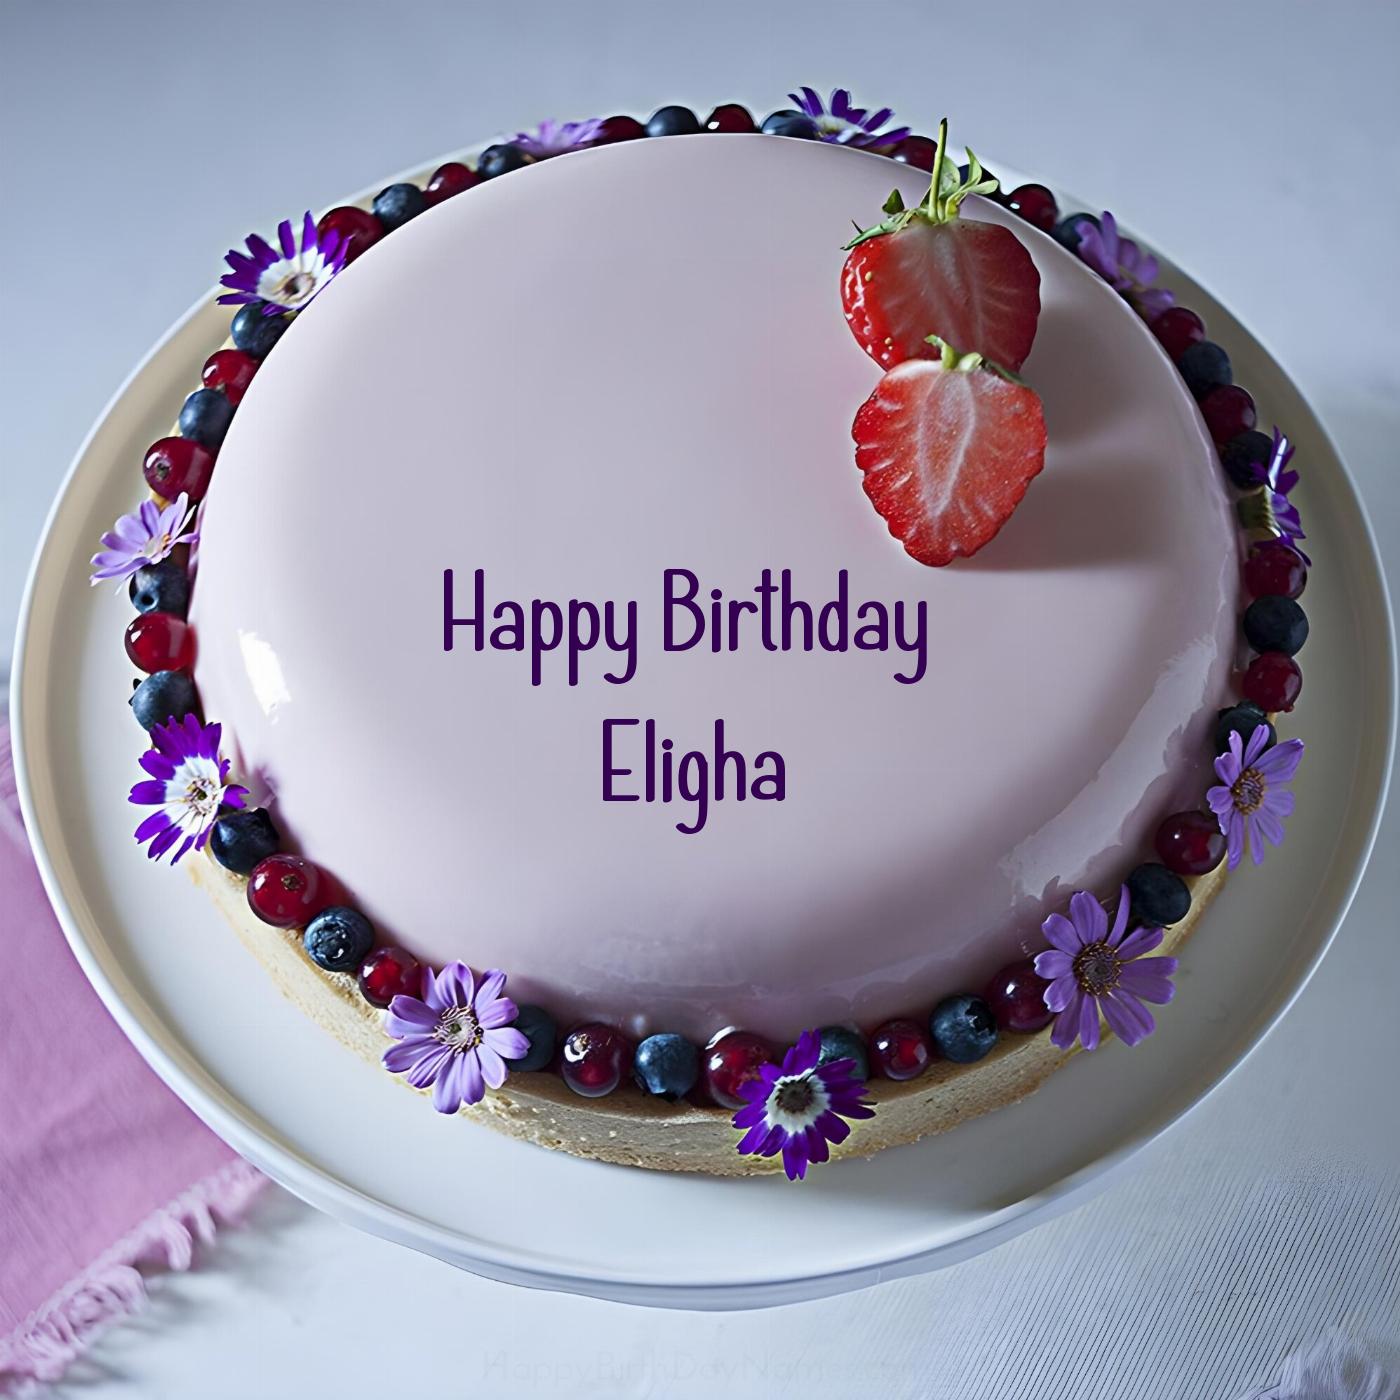 Happy Birthday Eligha Strawberry Flowers Cake